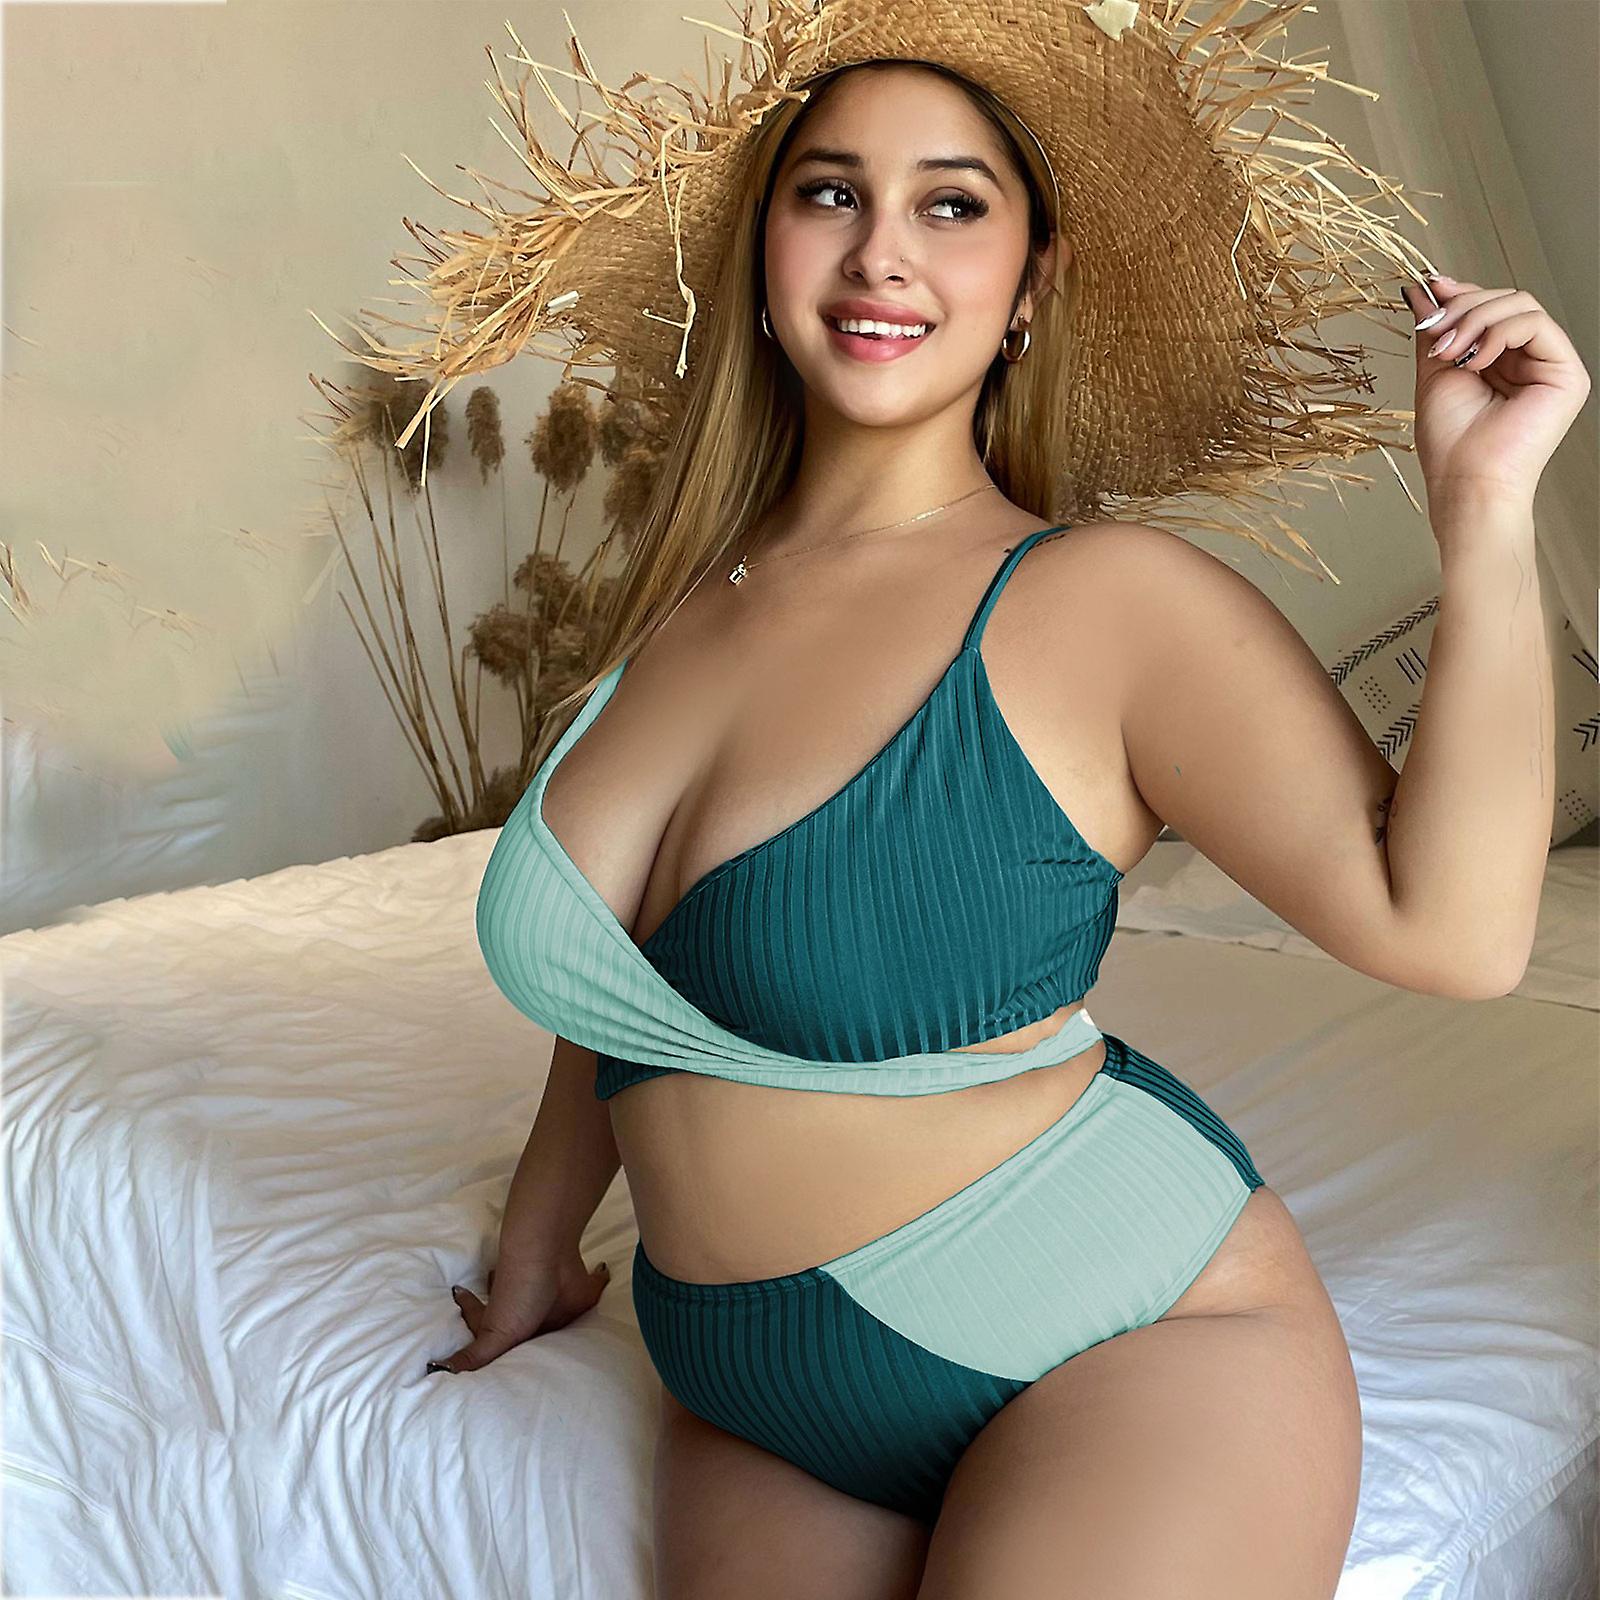 david hartawan recommends plus size bikini models photos pic